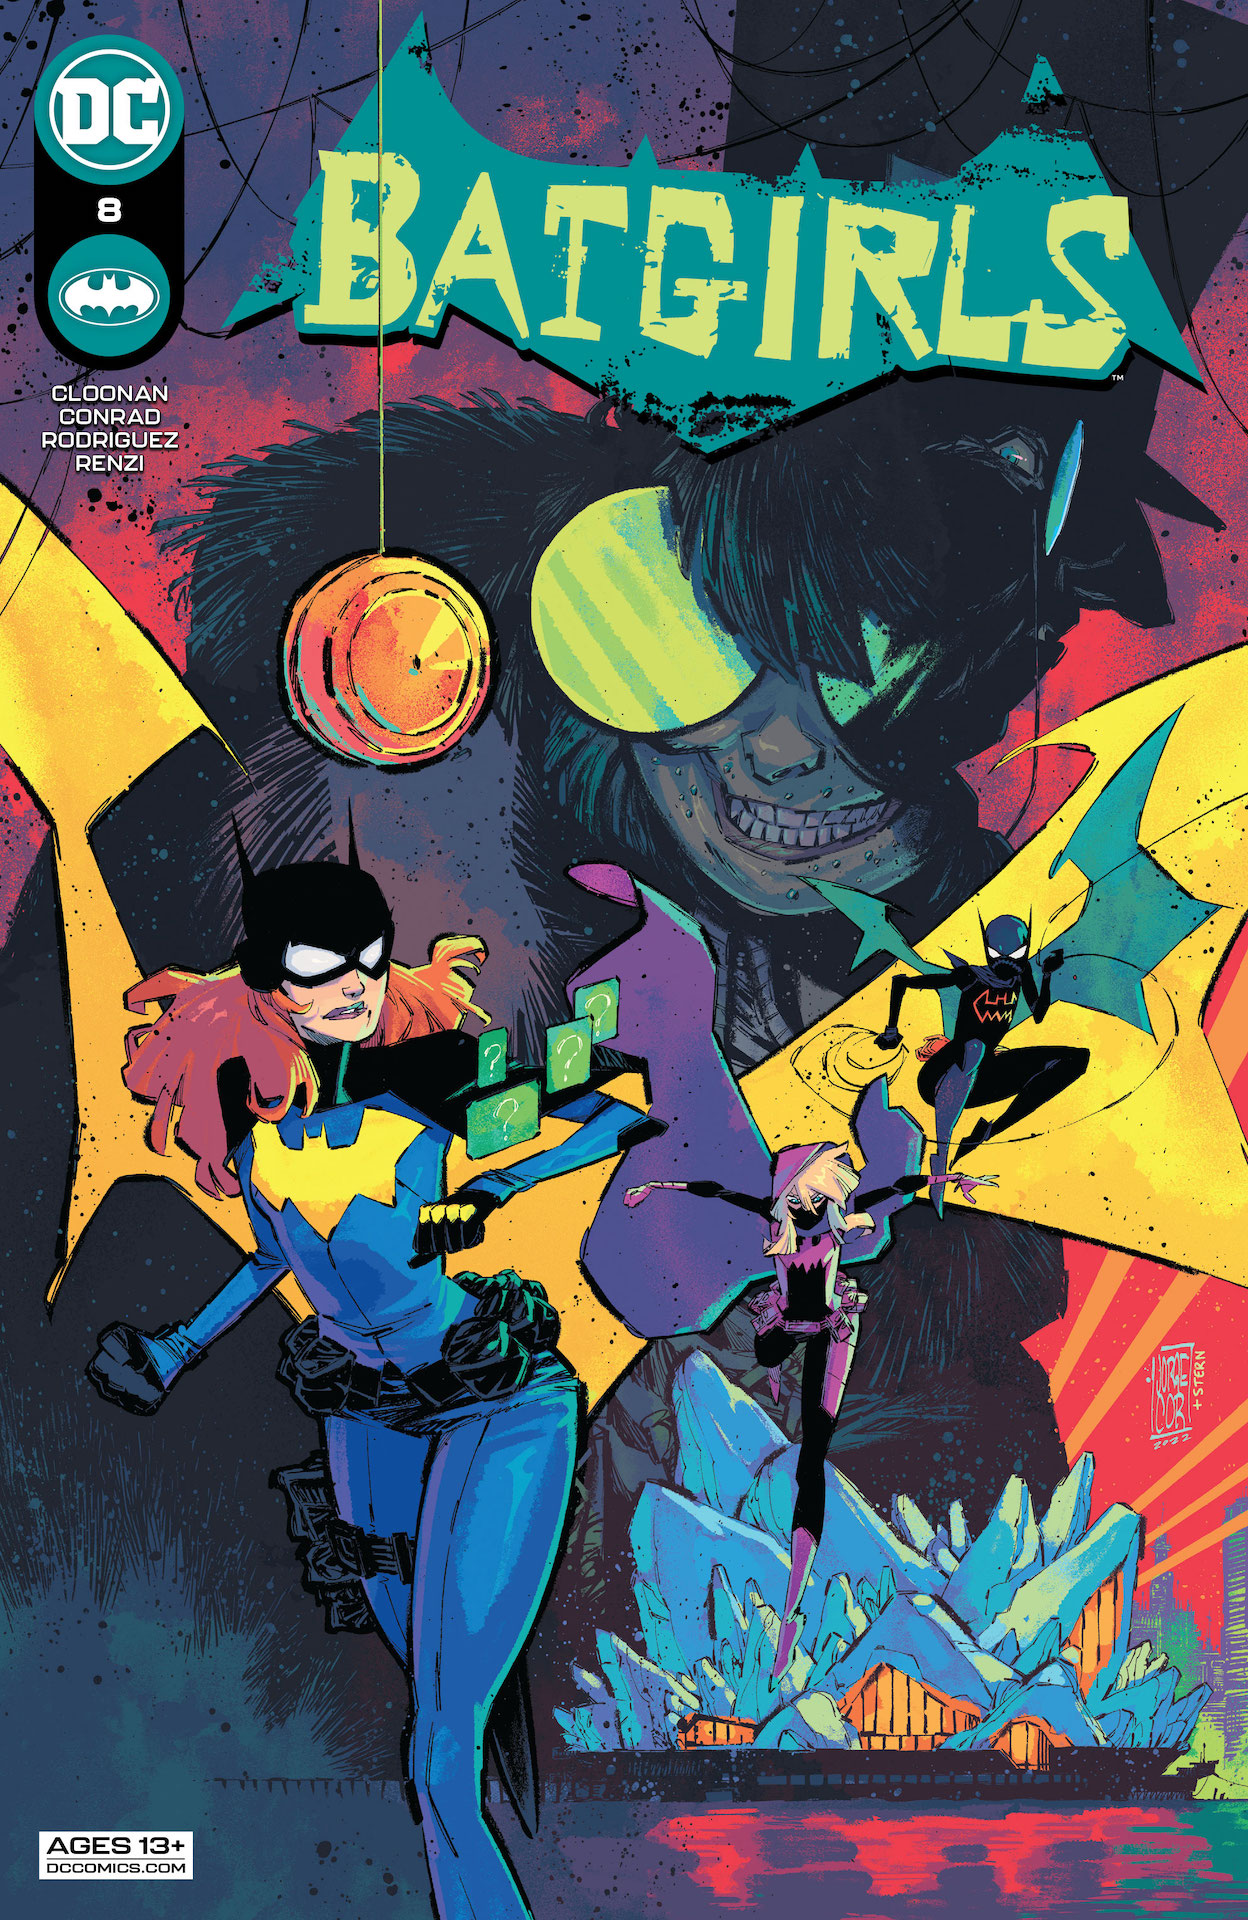 DC Preview: Batgirls #8